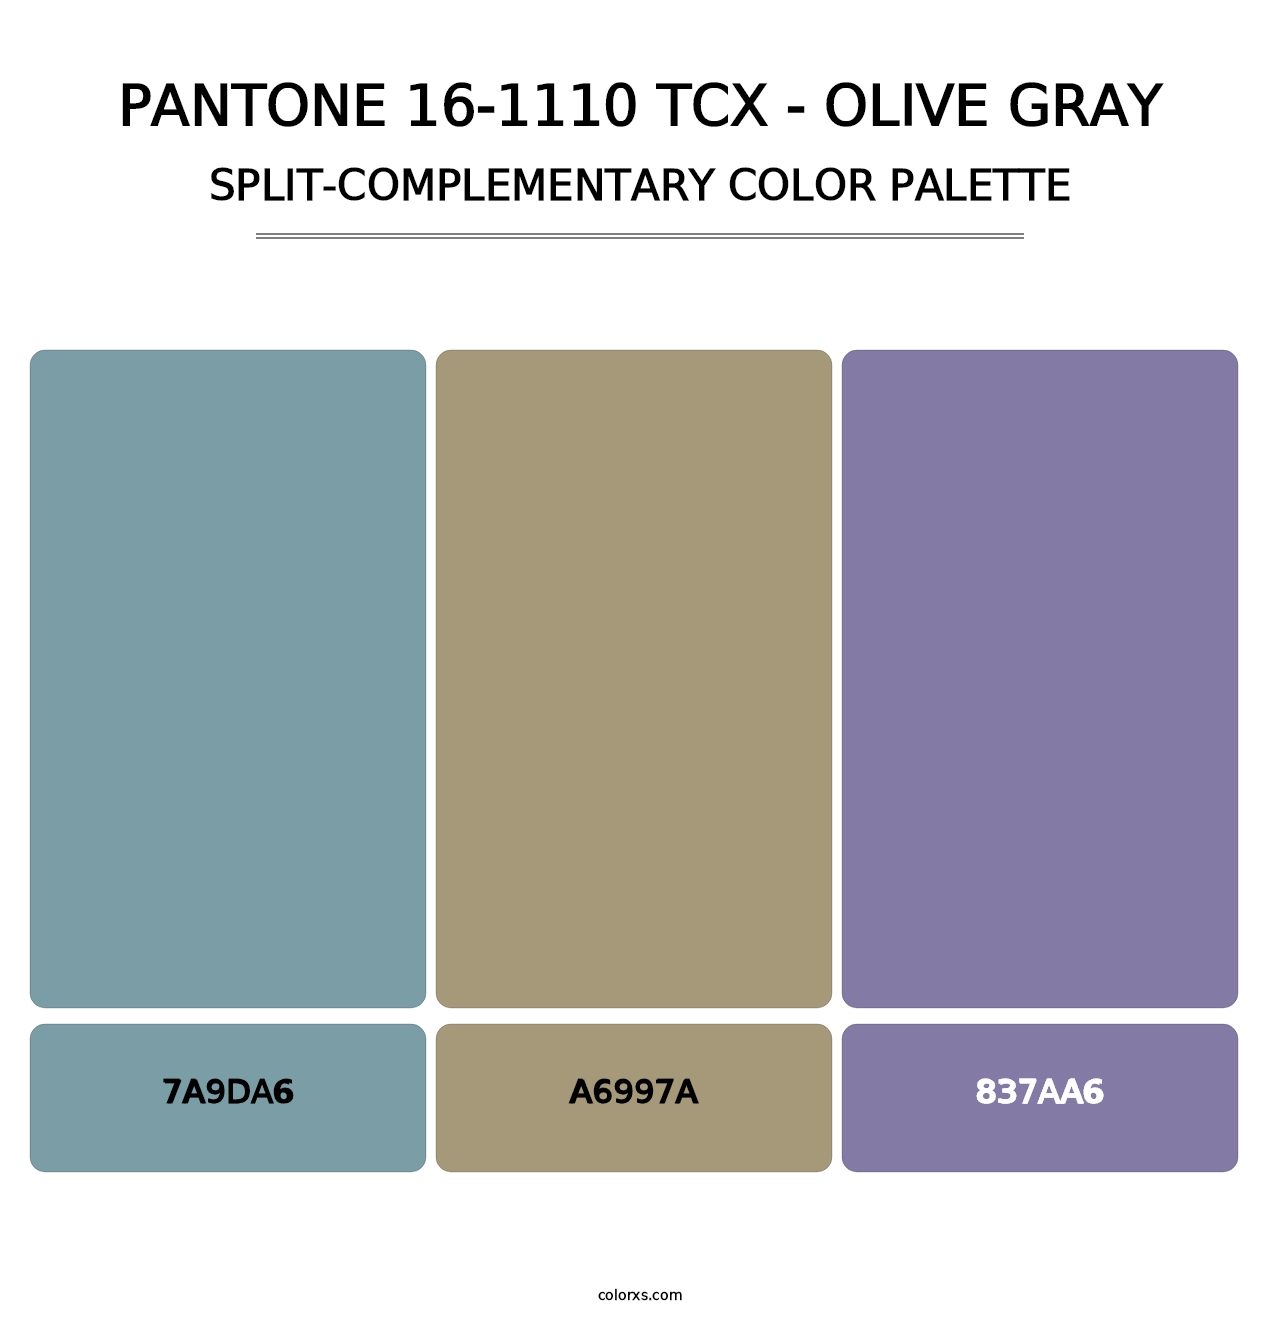 PANTONE 16-1110 TCX - Olive Gray - Split-Complementary Color Palette